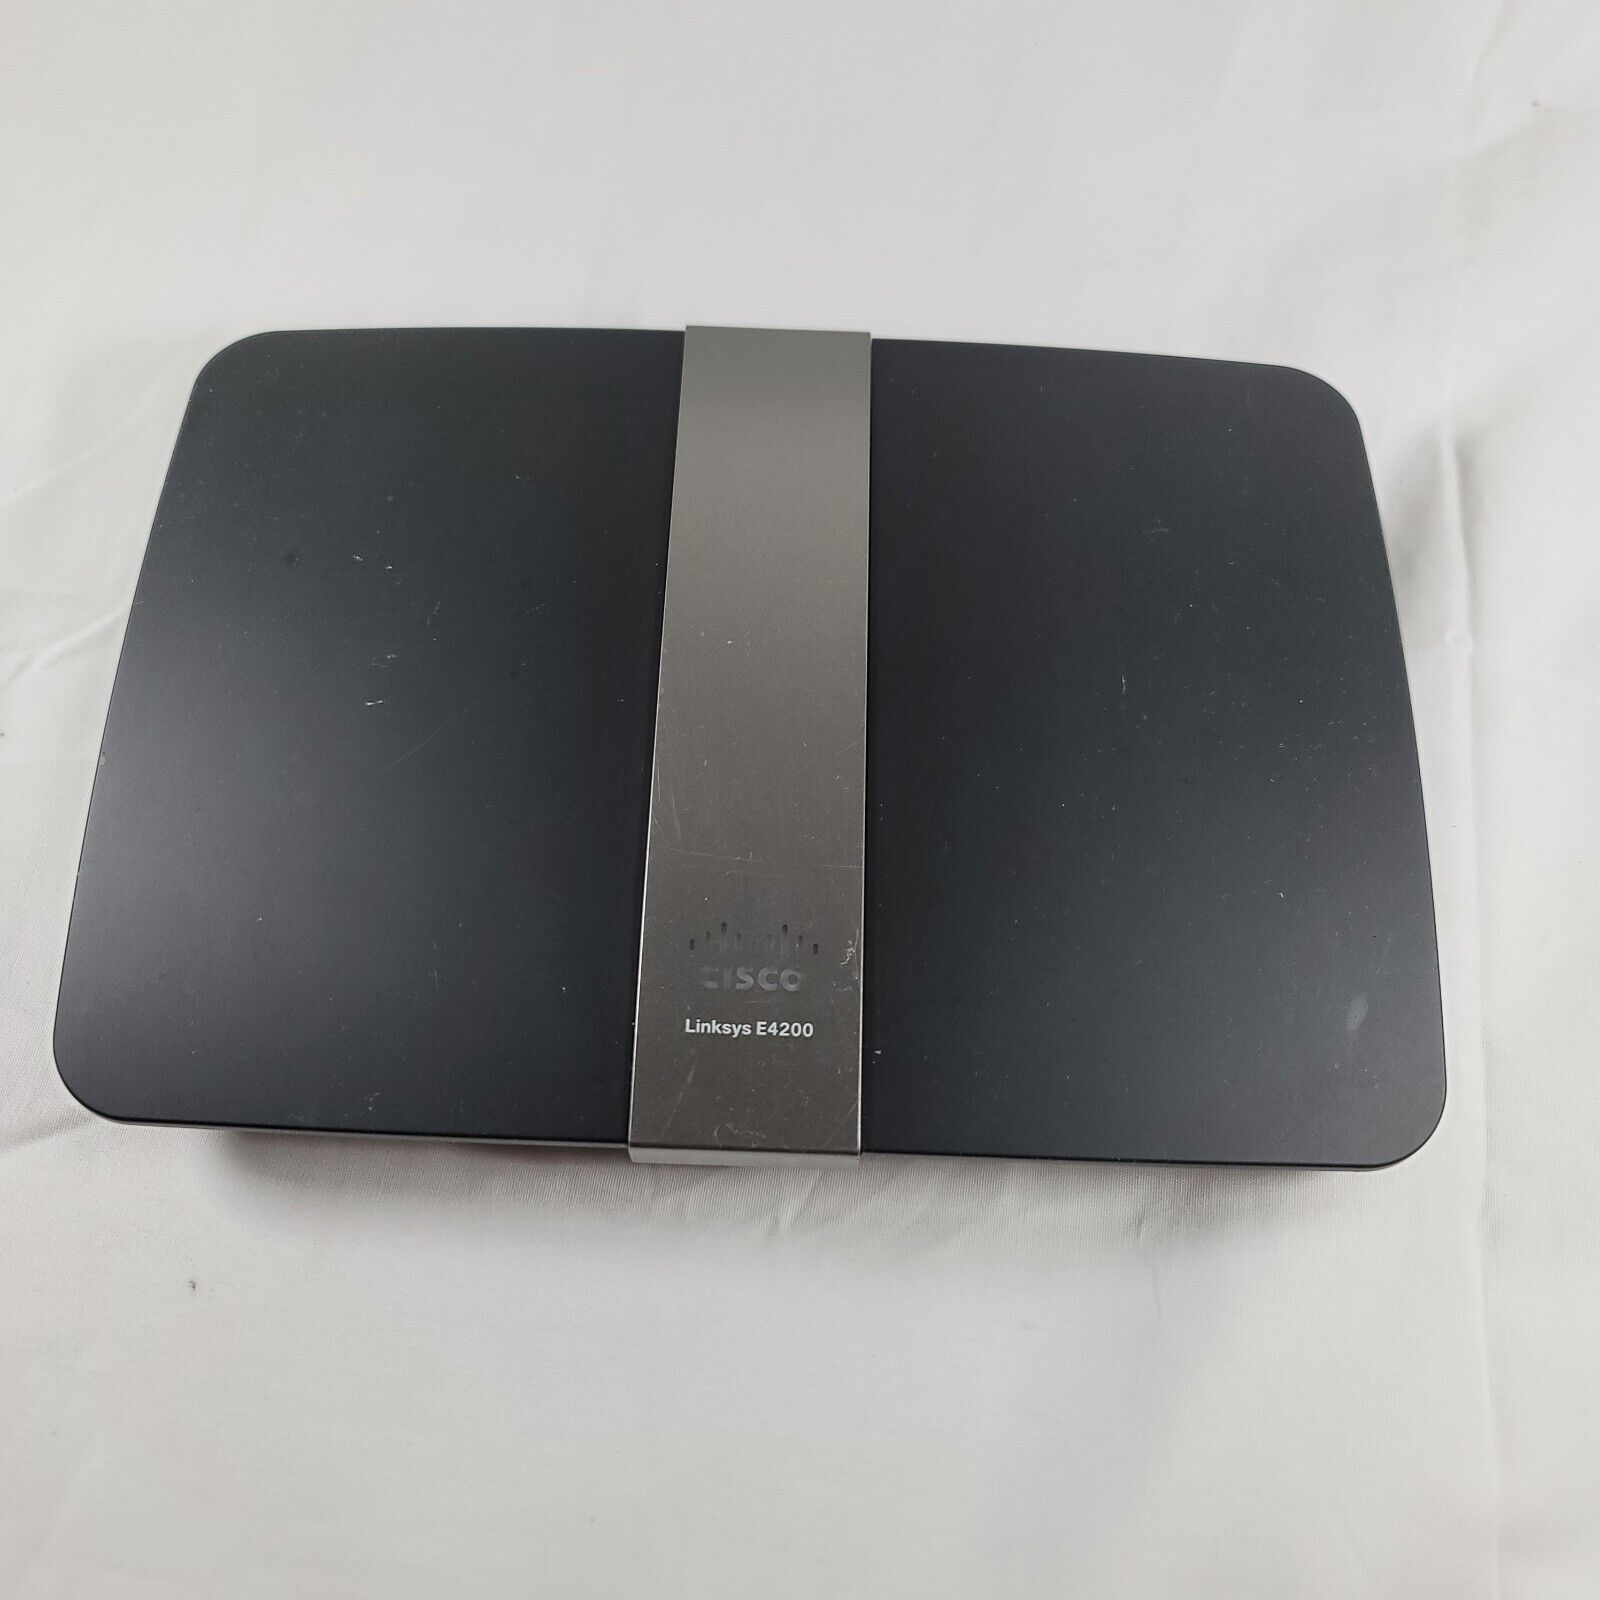 Cisco Linksys E4200 N750 4-Port Gigabit Wireless N Router, No Pwr Cord